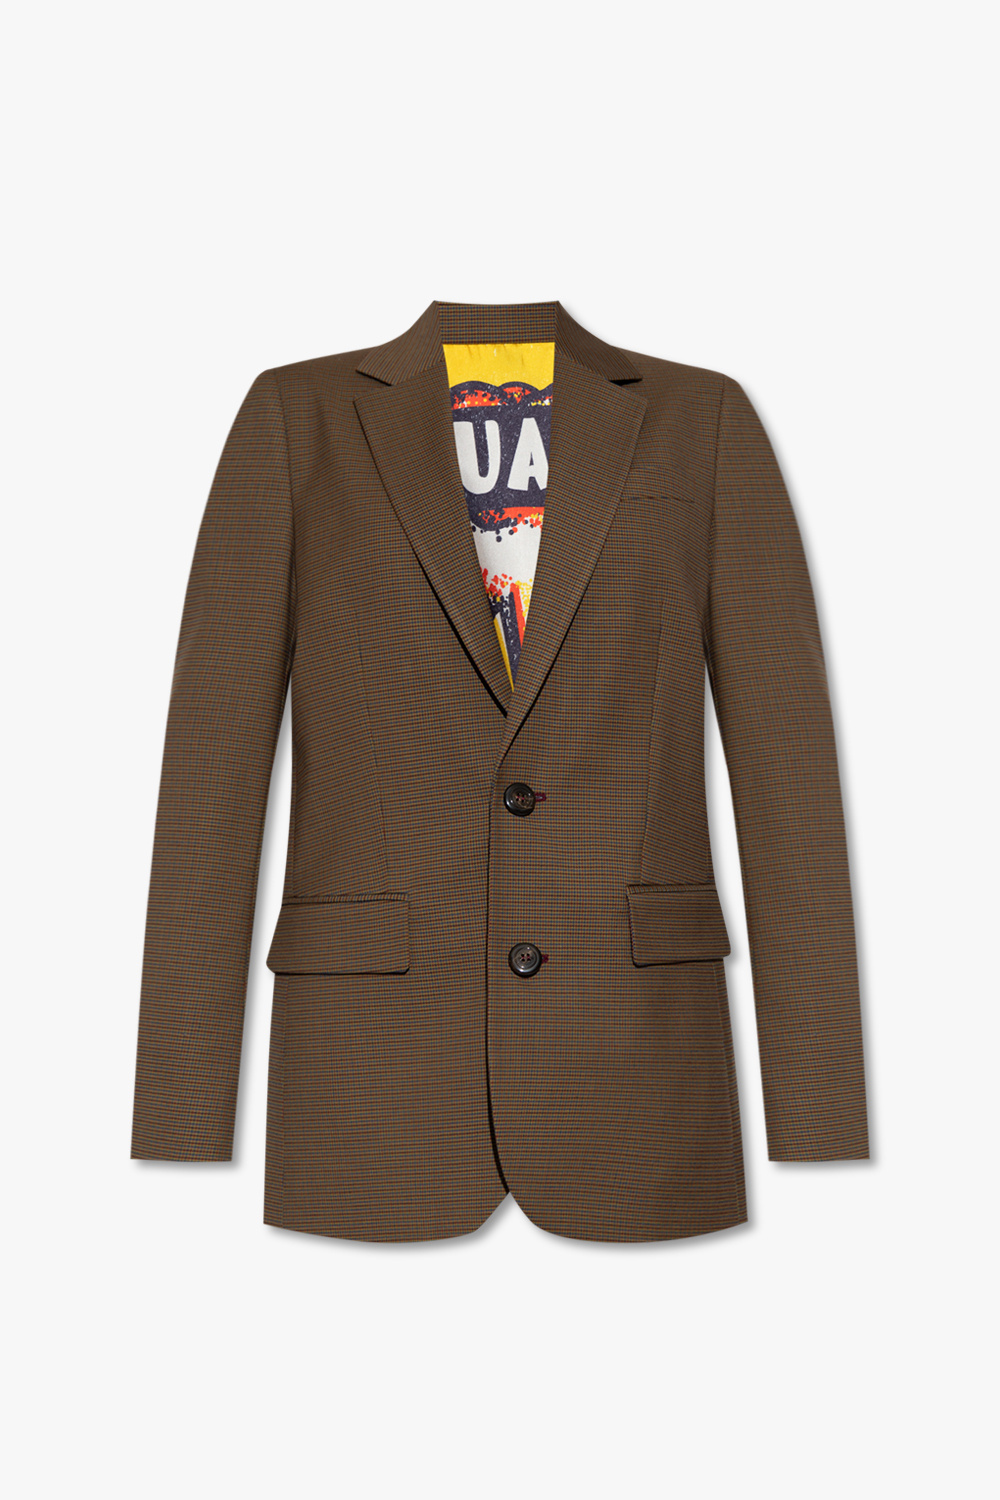 Dsquared2 ‘Manhattan’ patterned blazer